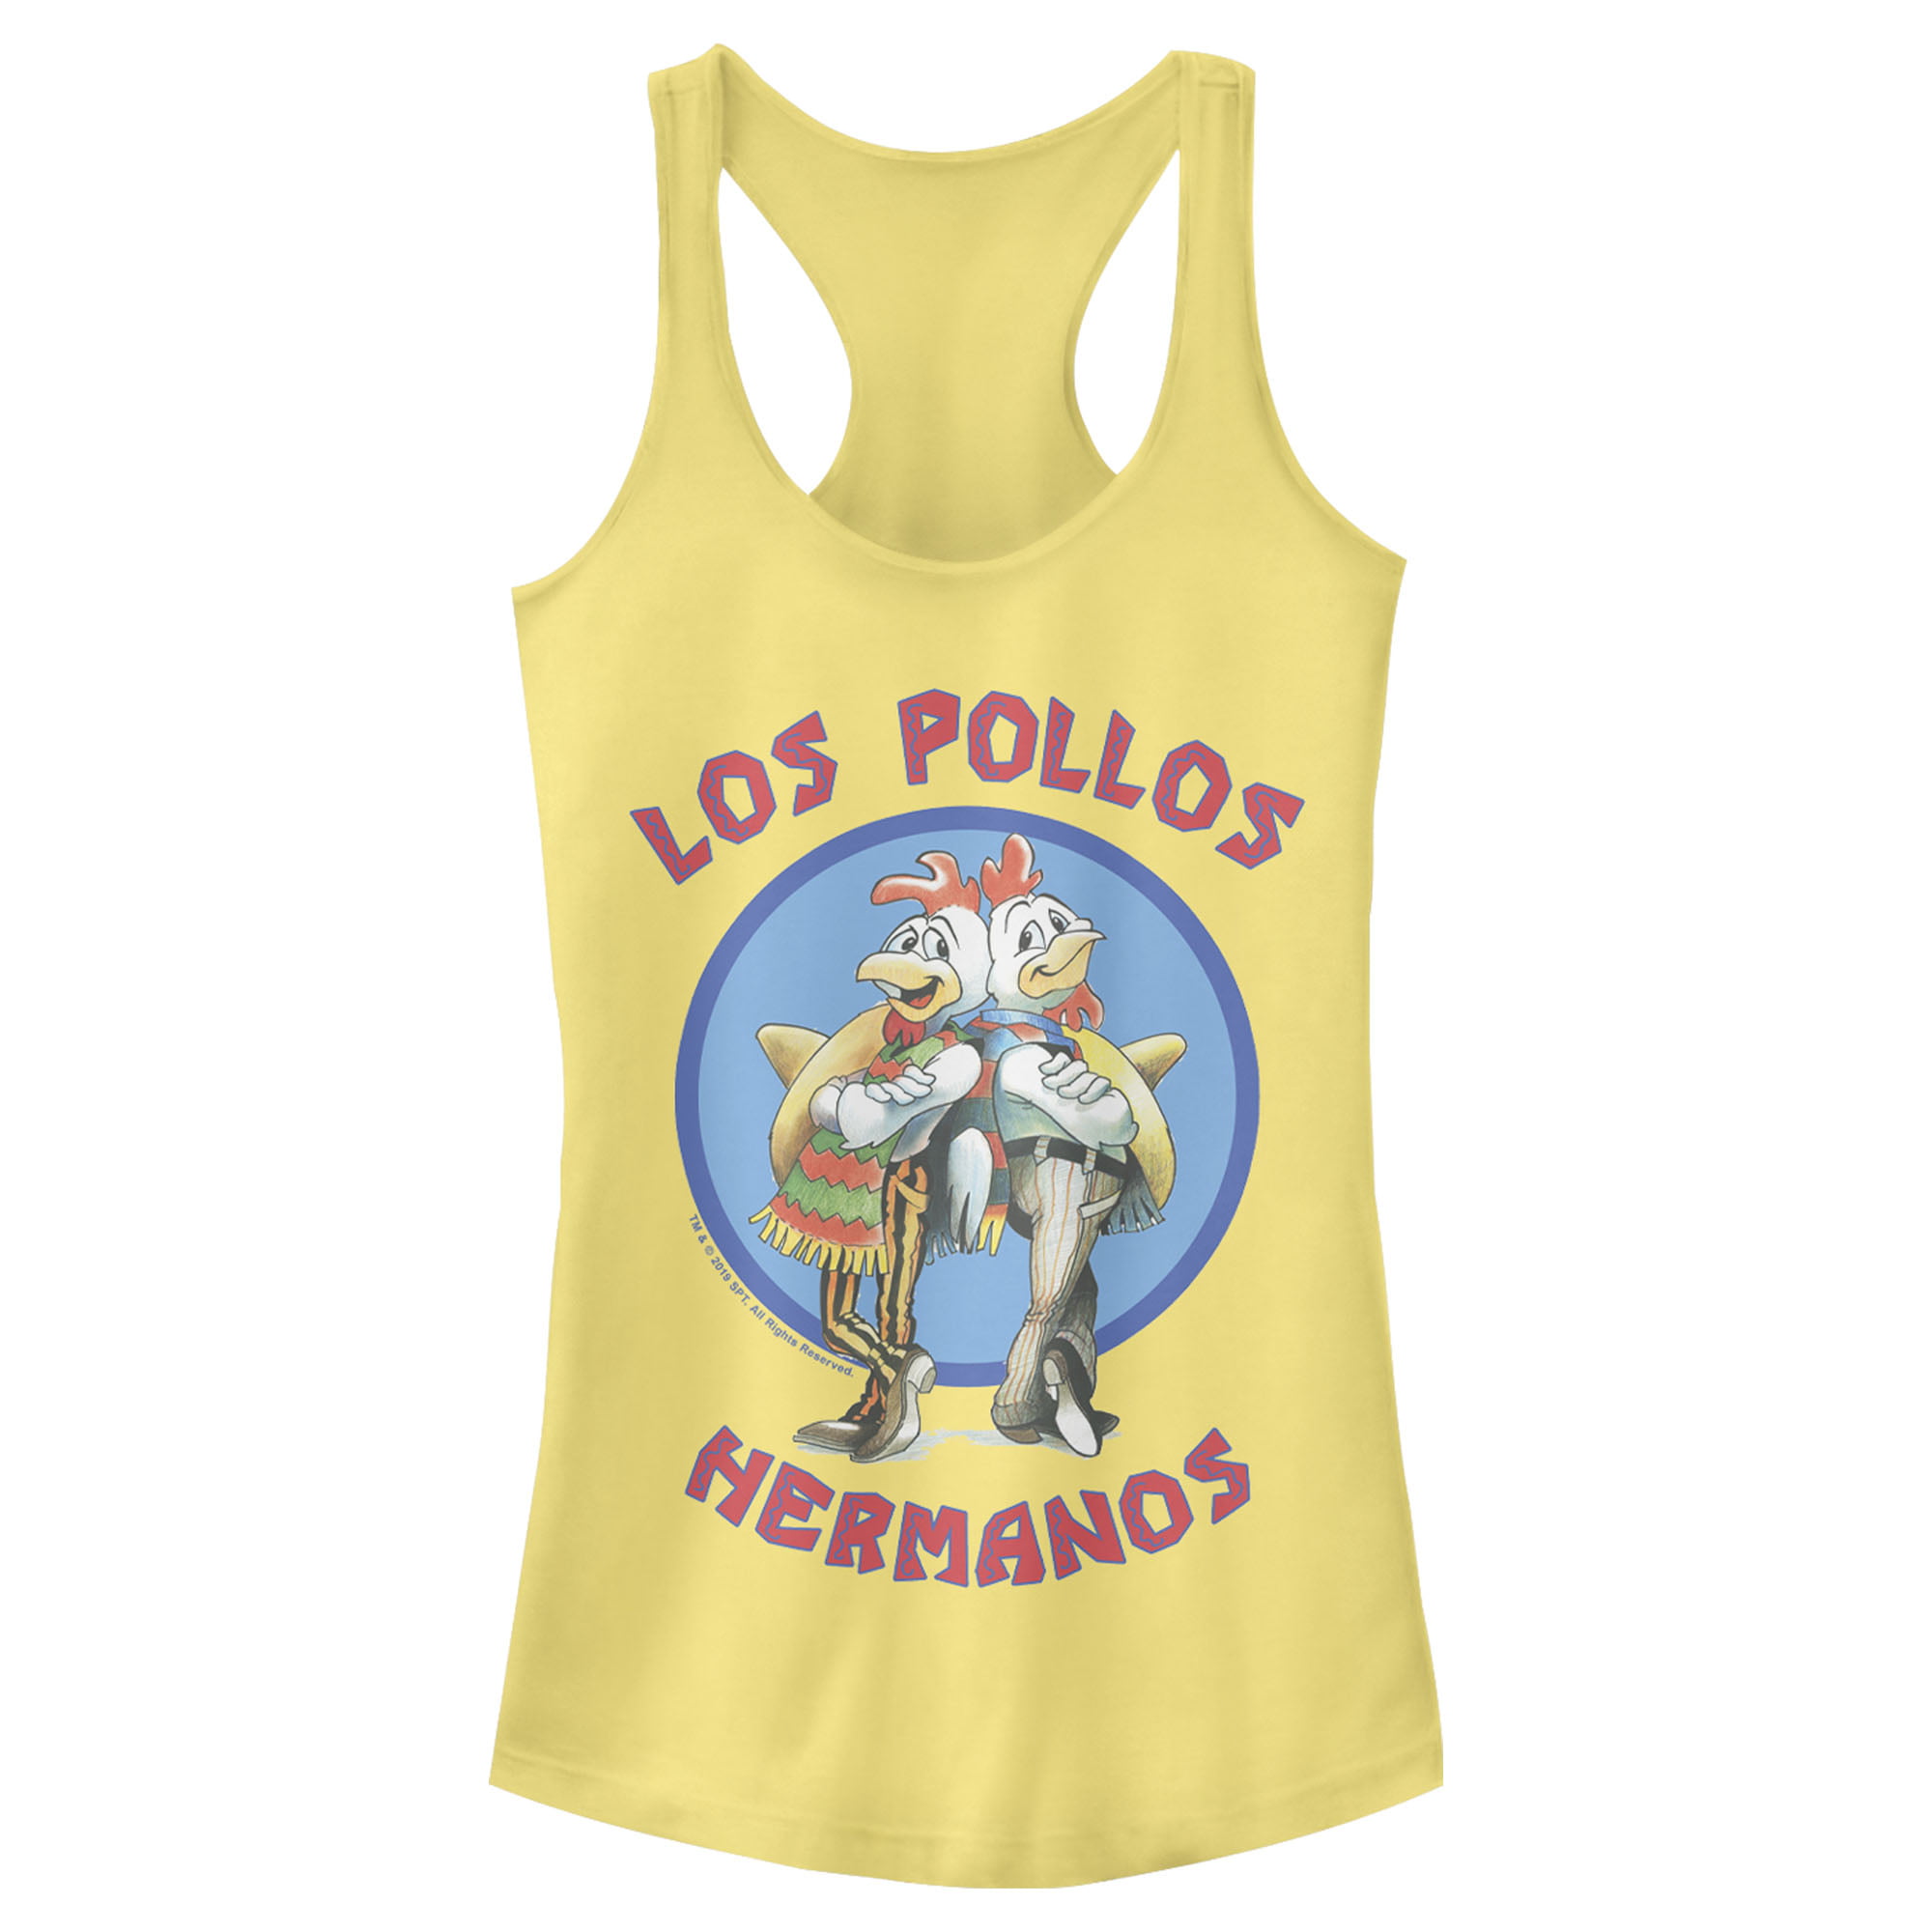 Los Pollos Hermanos Breaking Bad Inspired Mens Ladies T-Shirts Vests S-XXL Size 